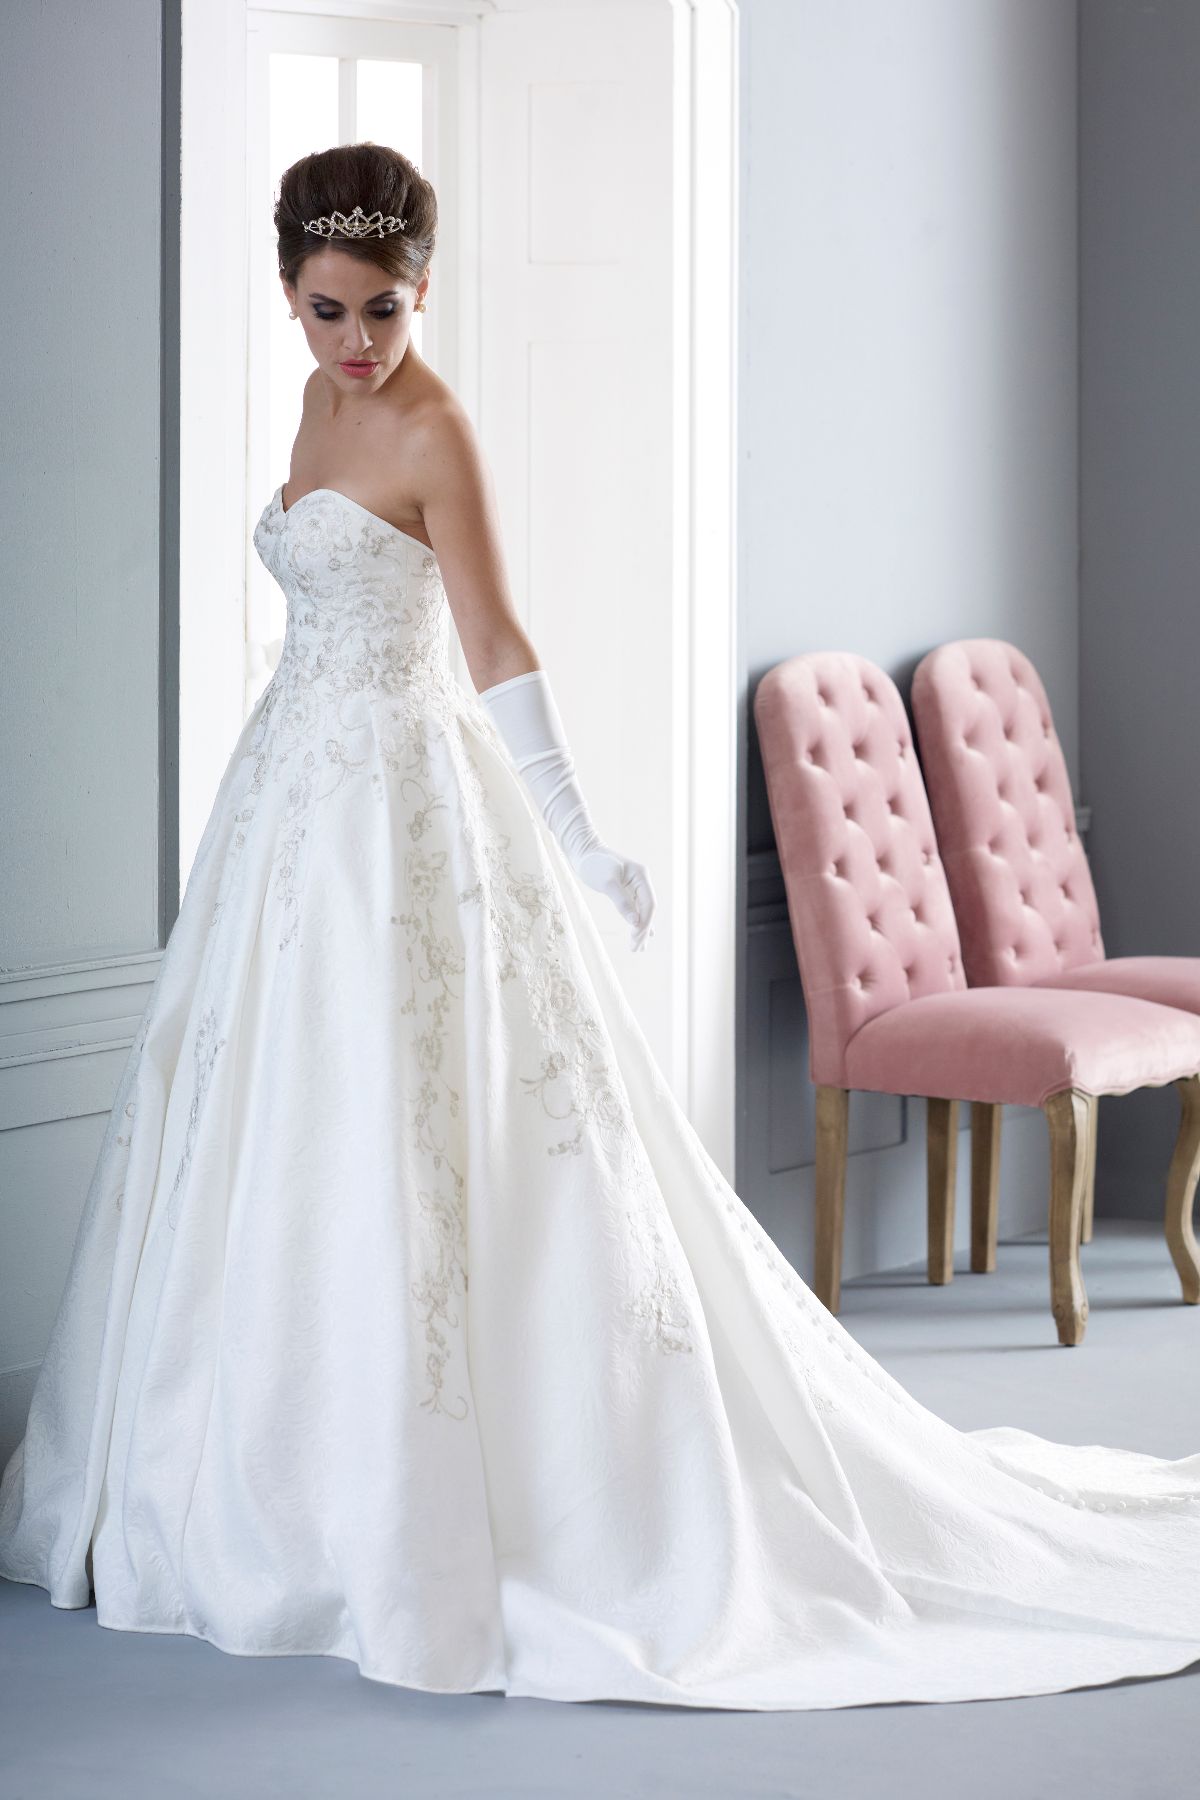 Best Dress 2 Impress Bridal-Image-98